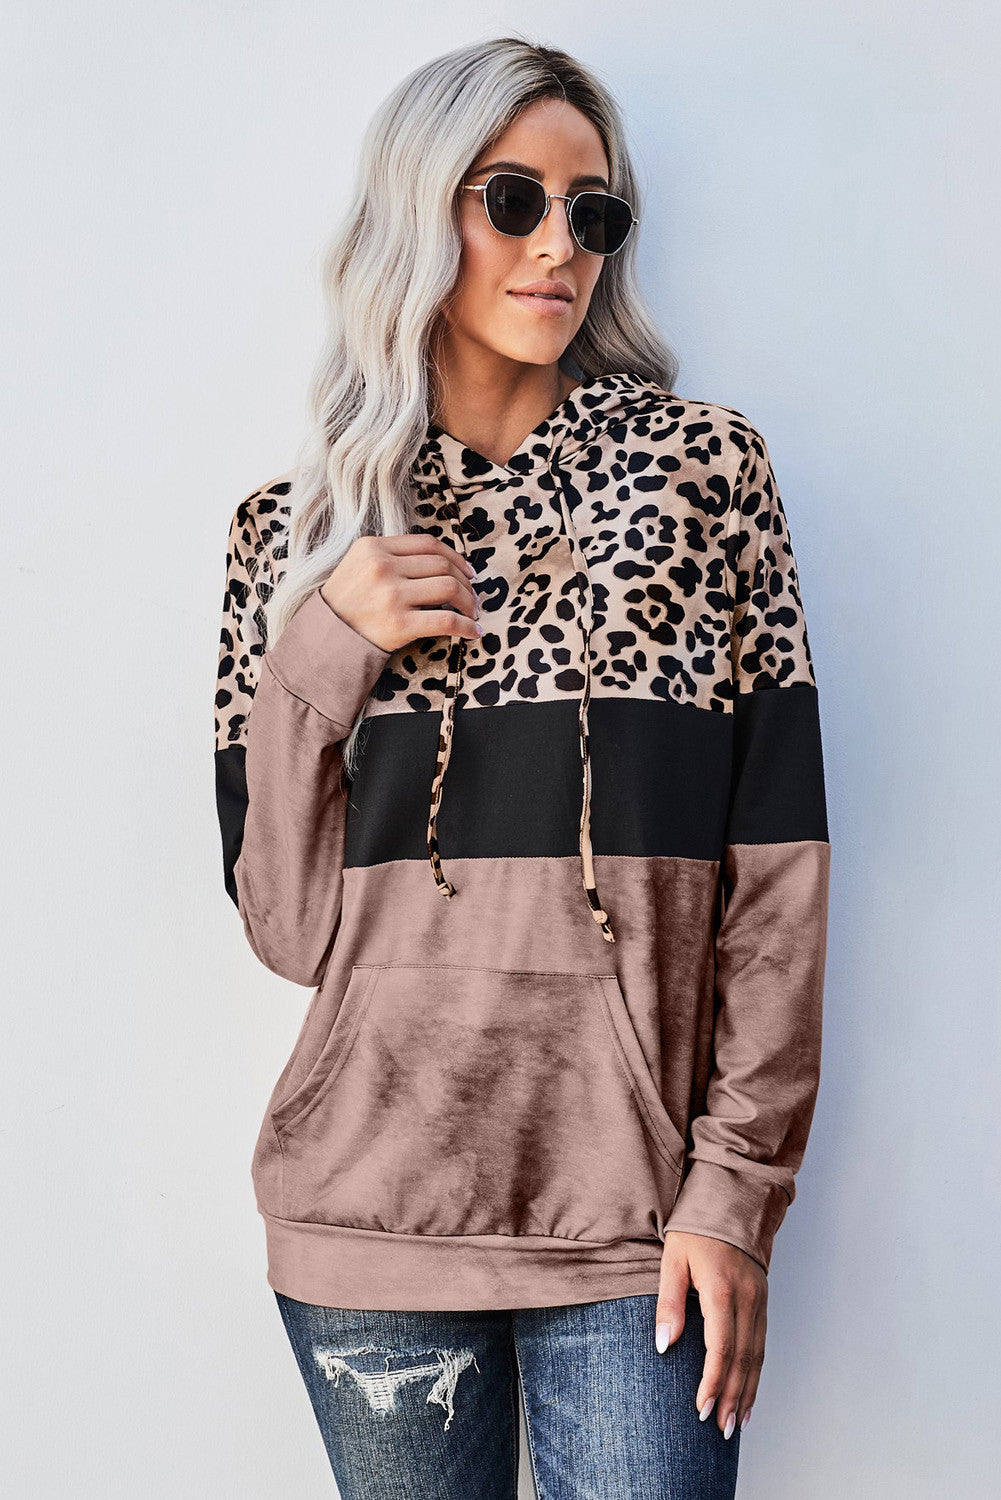 Cali Chic Juniors' Sweatshirt Hoodie Celebrity Brown Leopard Tie Dye Color Block